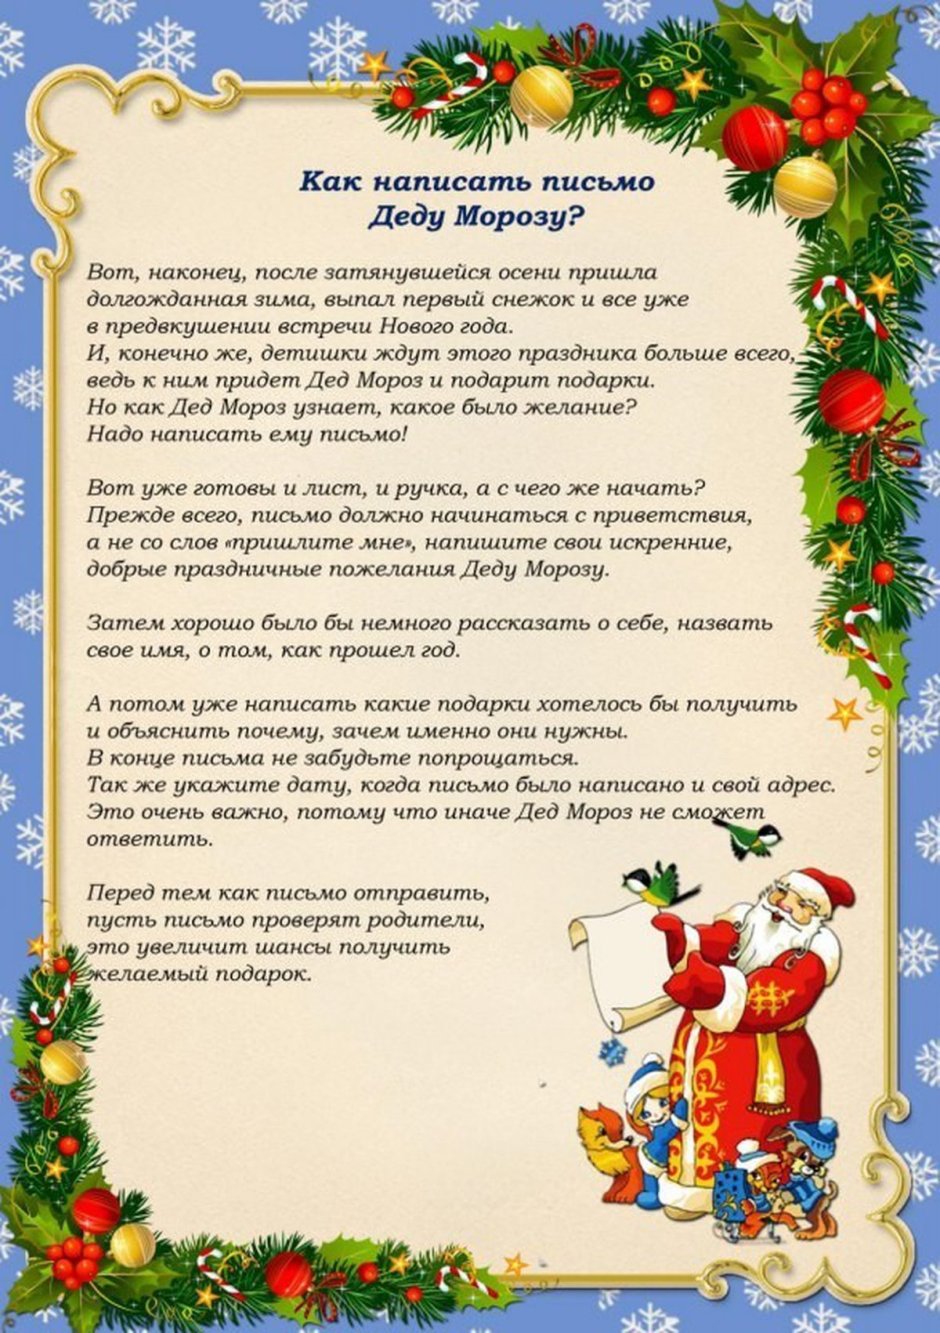 Письмо от Деда Мороза ребенку